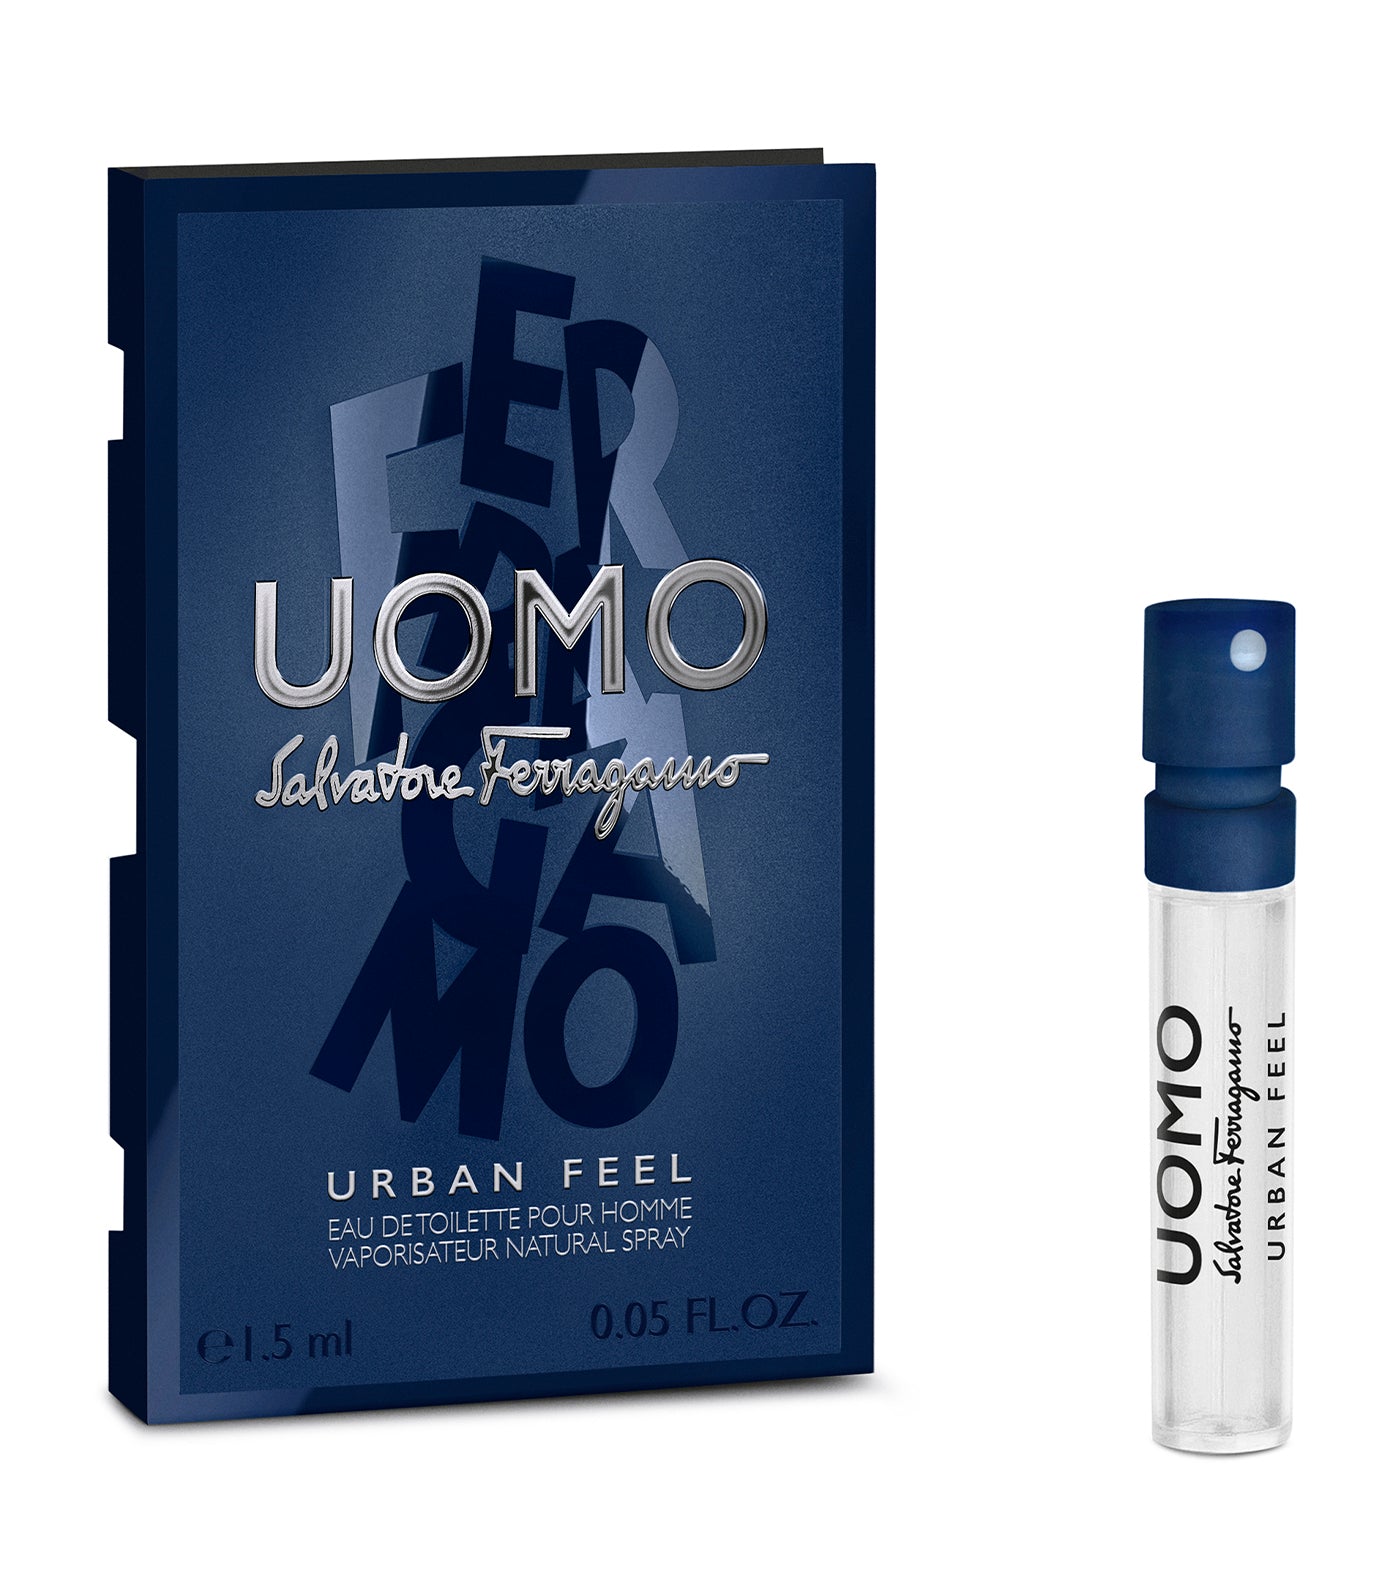 Free UOMO Salvatore Ferragamo Urban Feel Eau de Toilette Vial